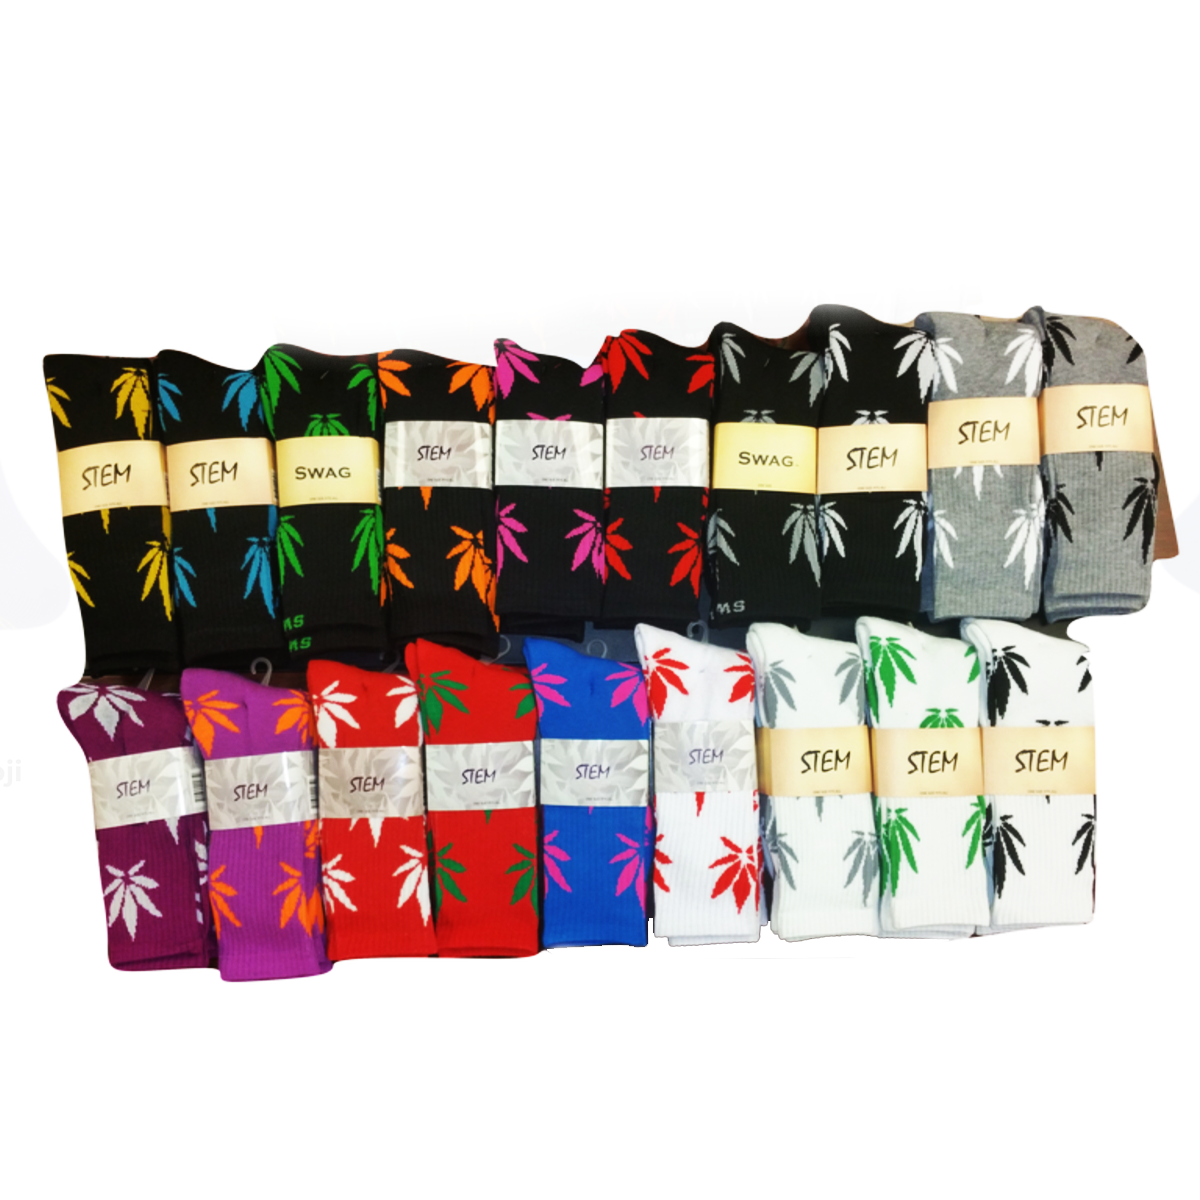 One Dozen (12 Pieces) Mix Colors Stem Socks One Size Fits All